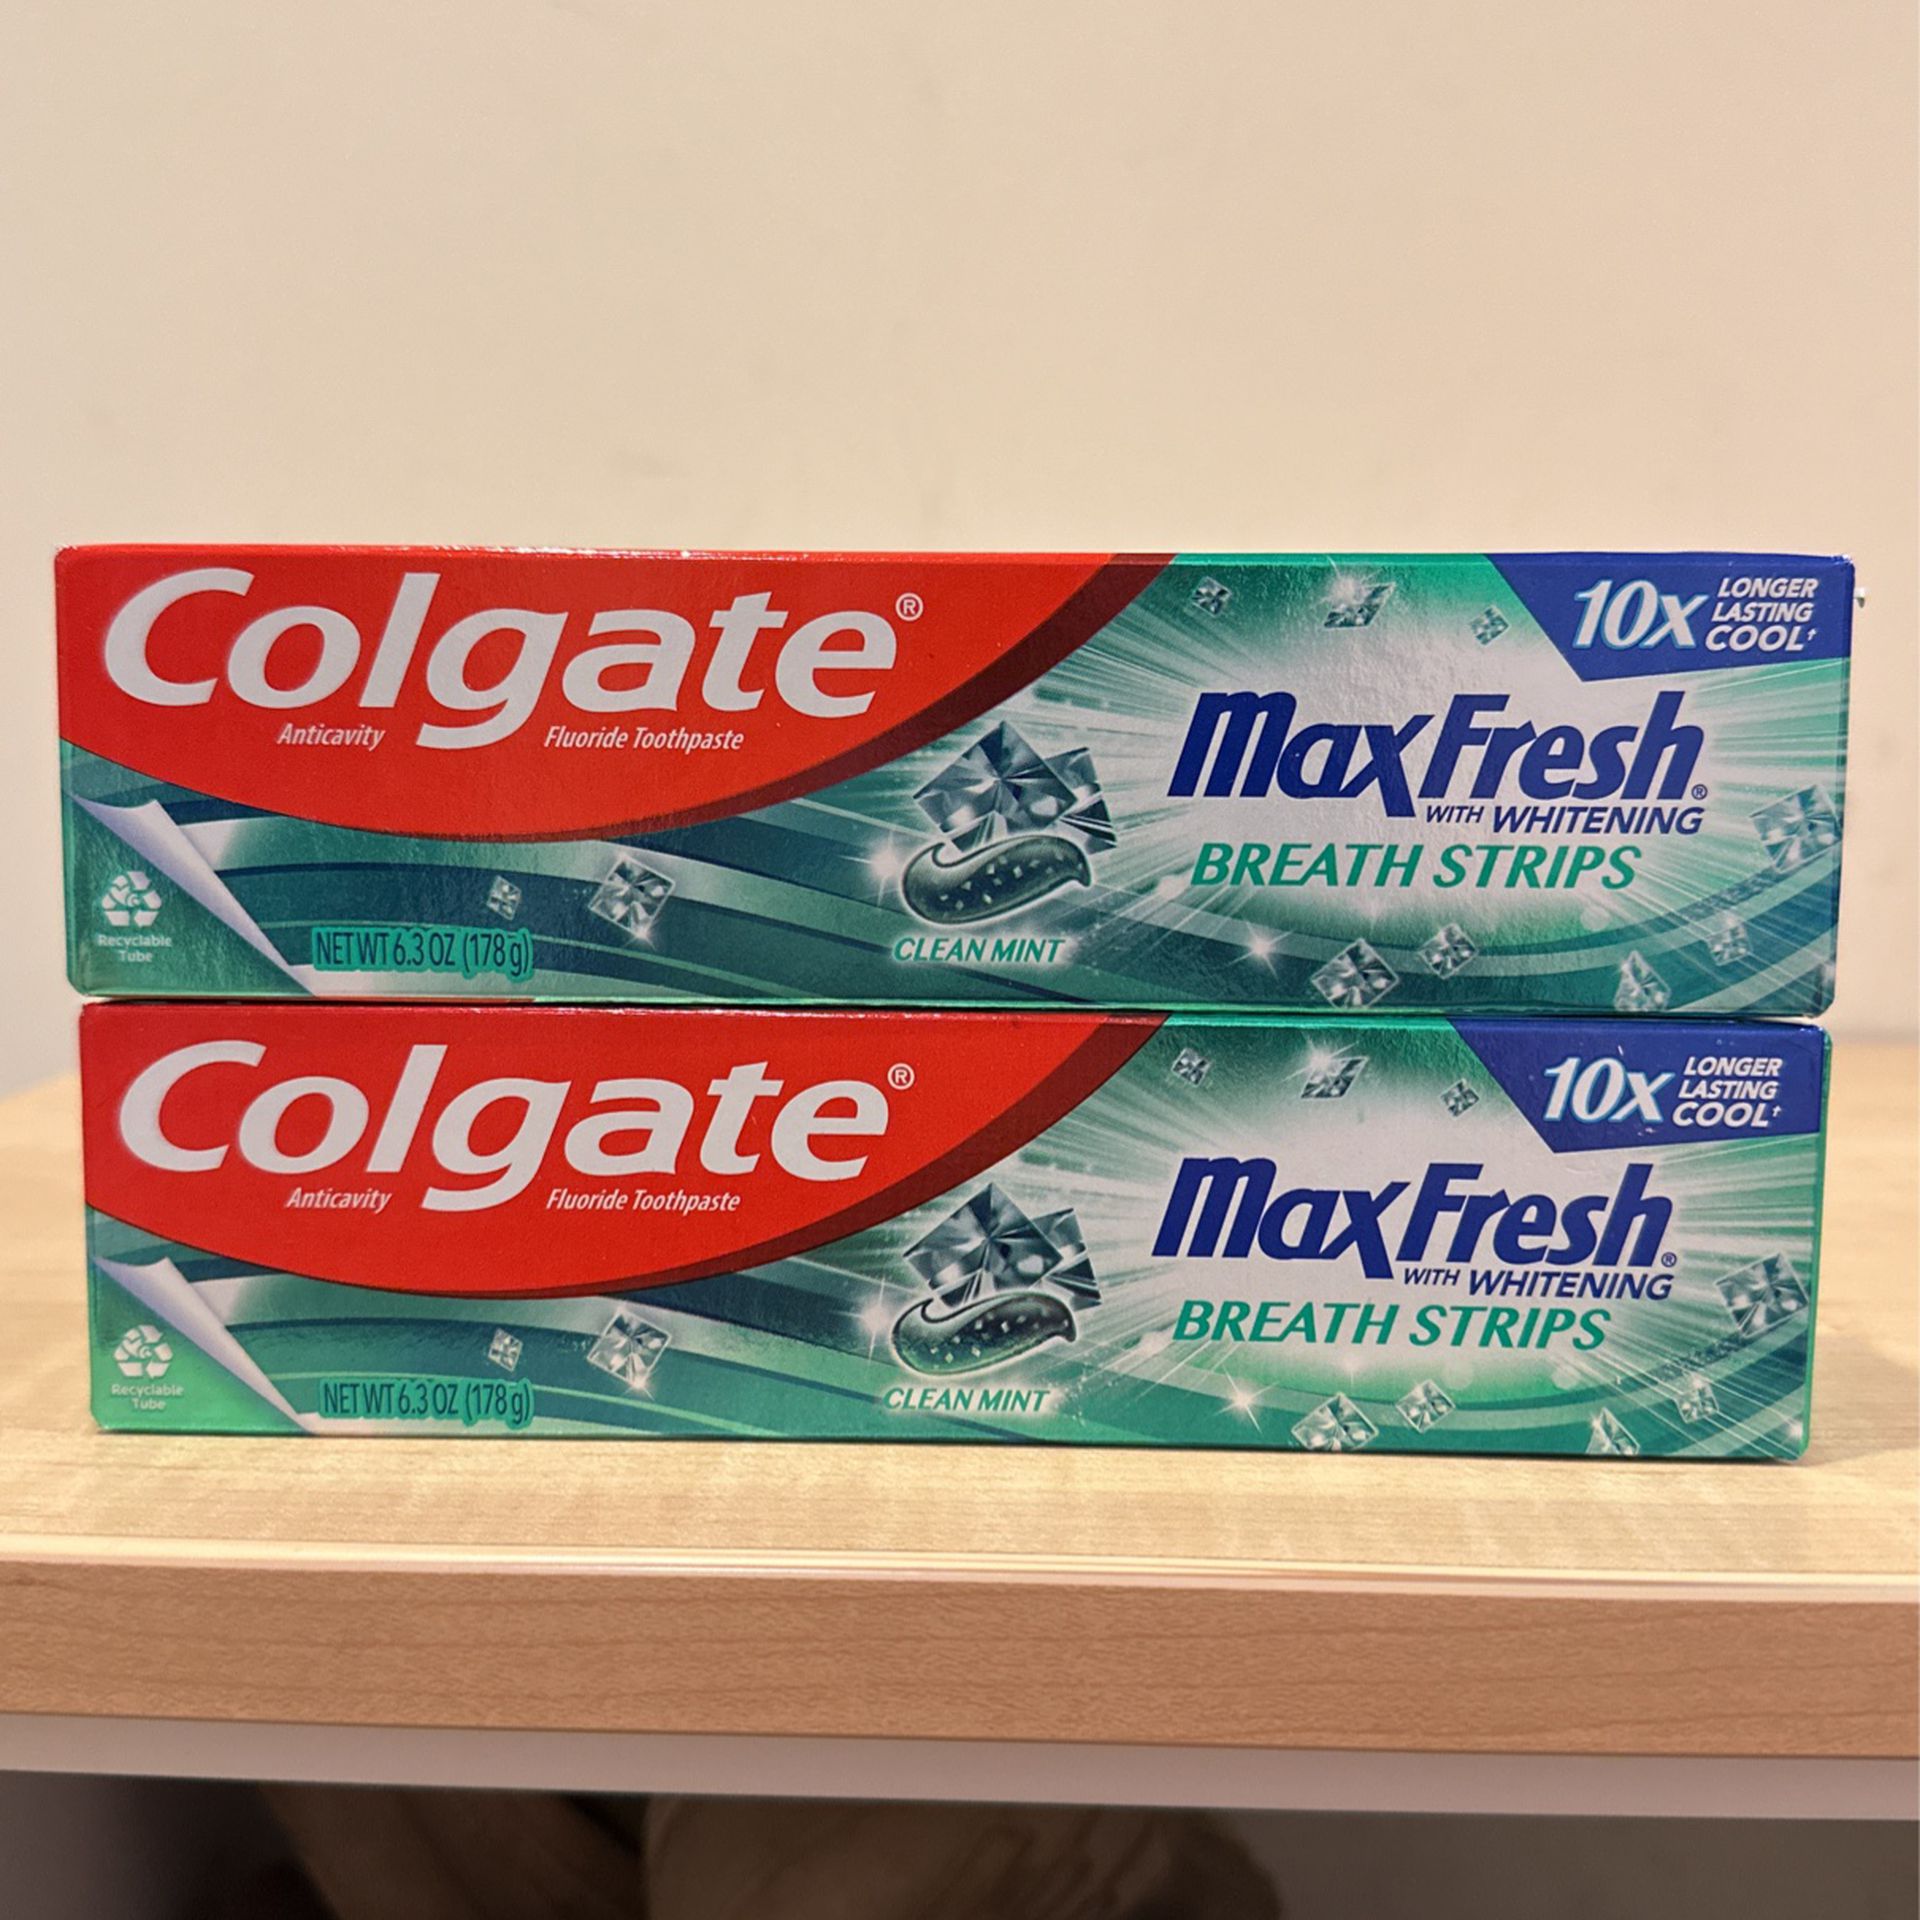 Colgate Max Fresh toothpaste 6.3 oz: $2 each 